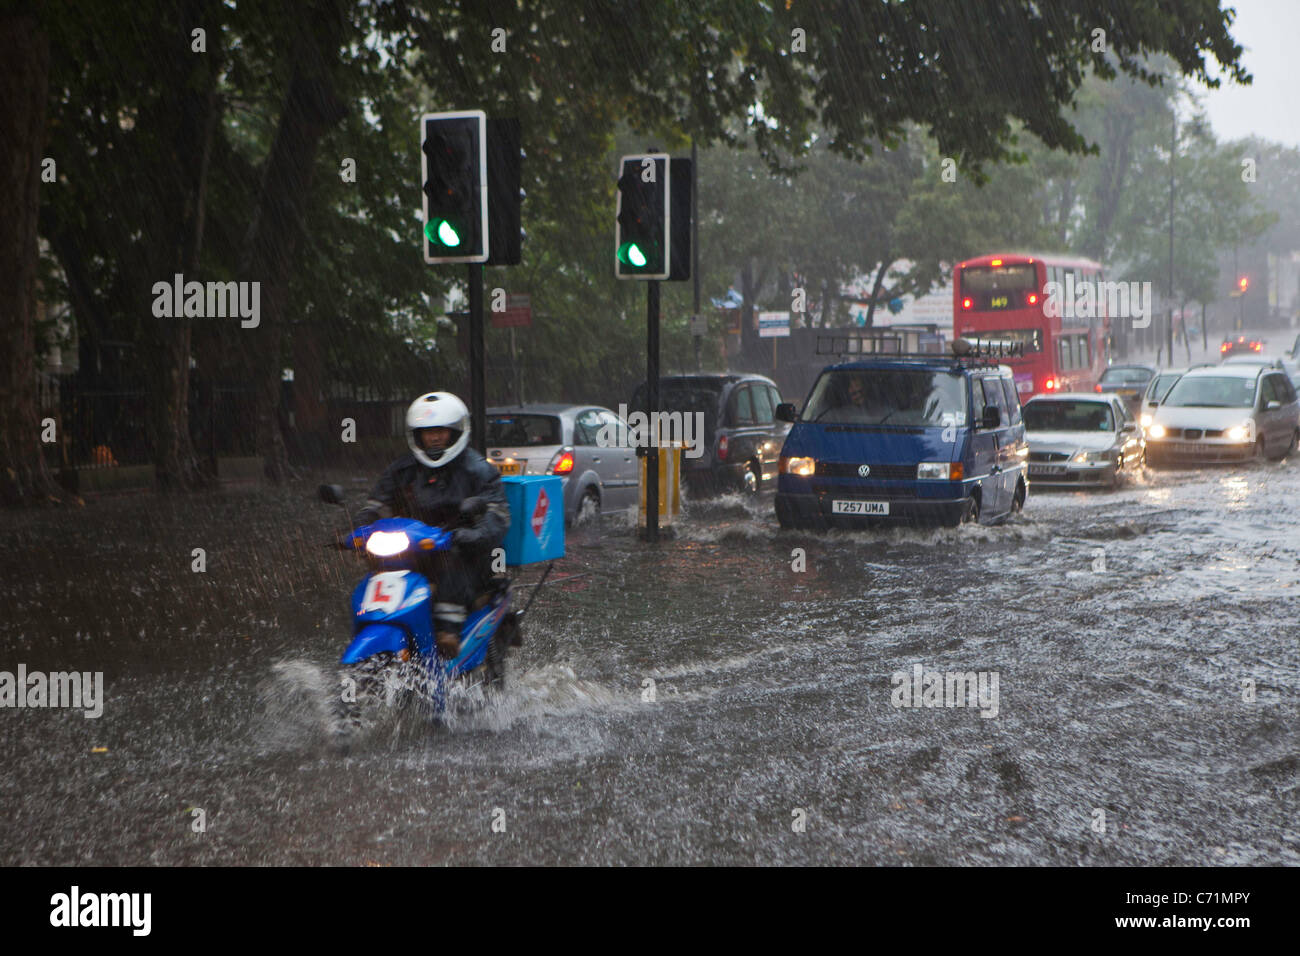 Heavy rain causes flash flooding in Stoke Newington, London. Traffic struggled as torrential rain flooded the area Stock Photo